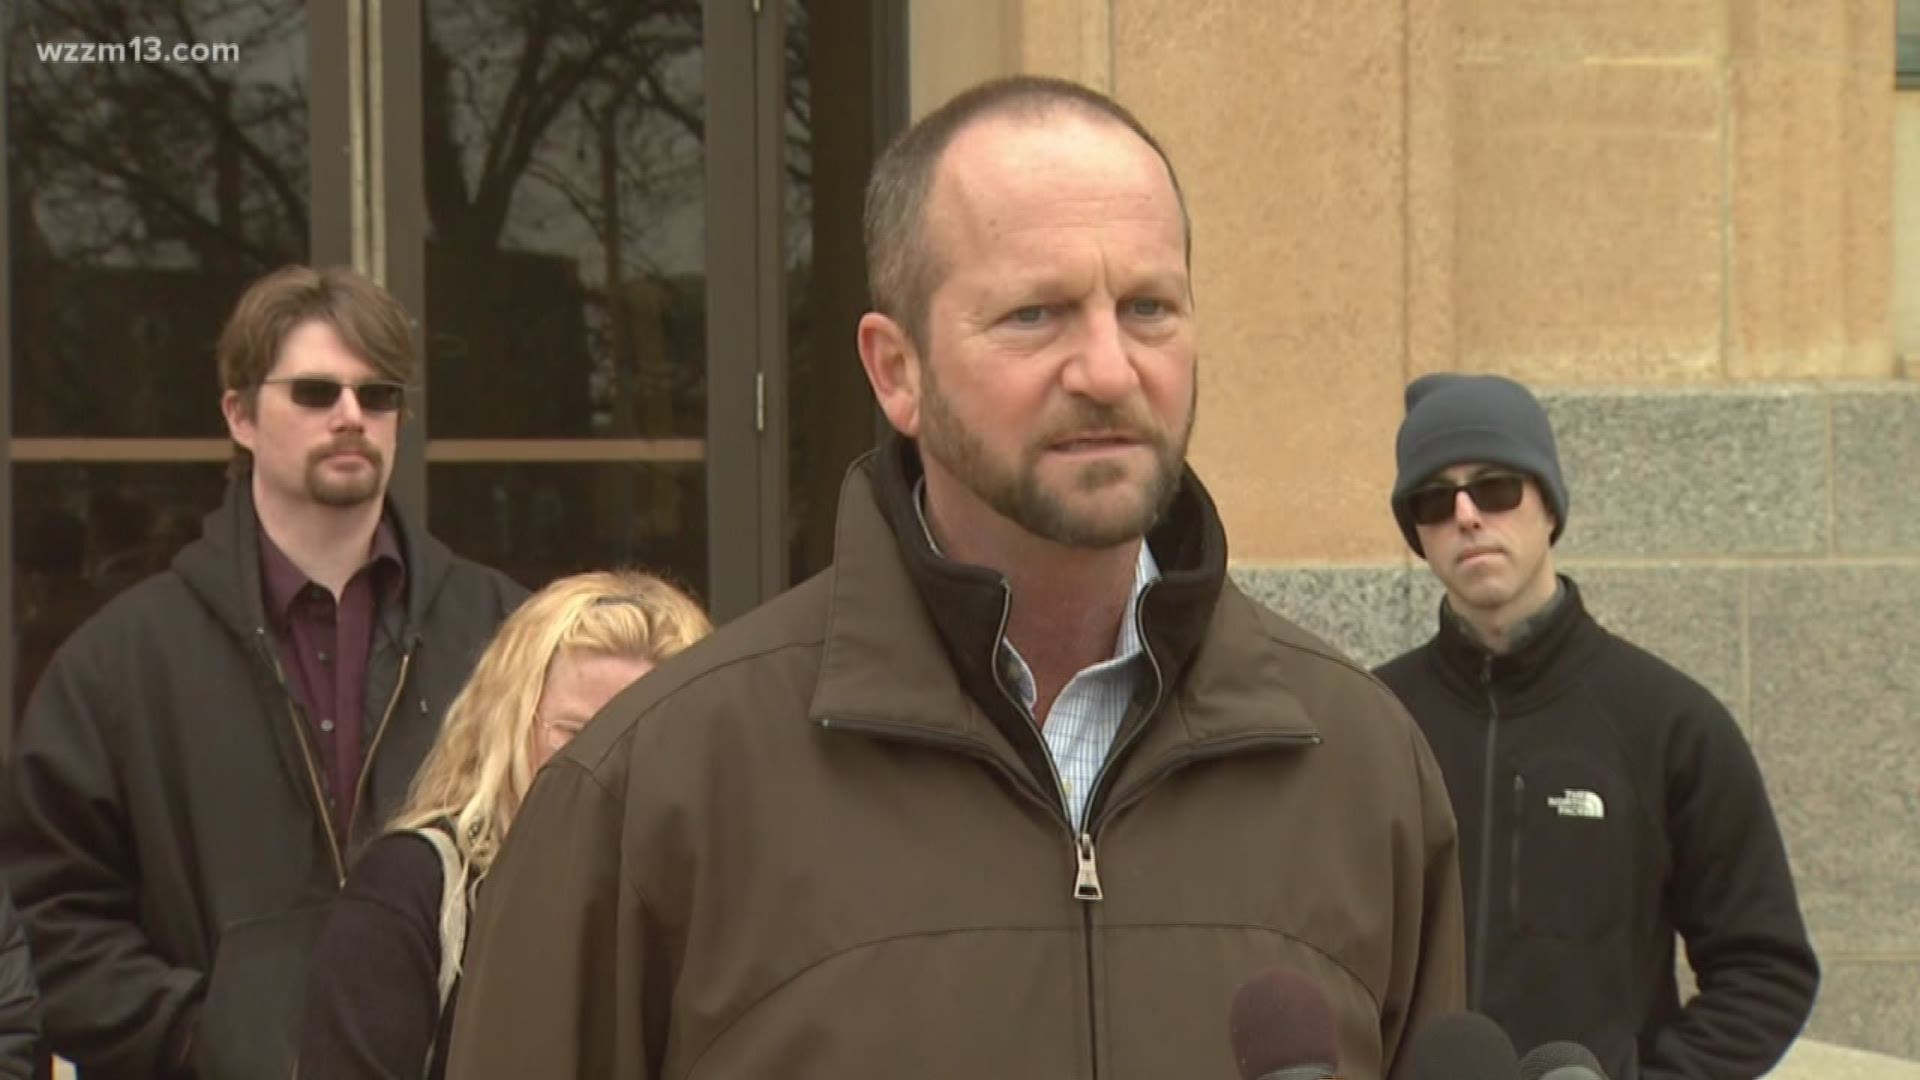 Family members of Kalamazoo shooting victims react to Dalton's sentencing